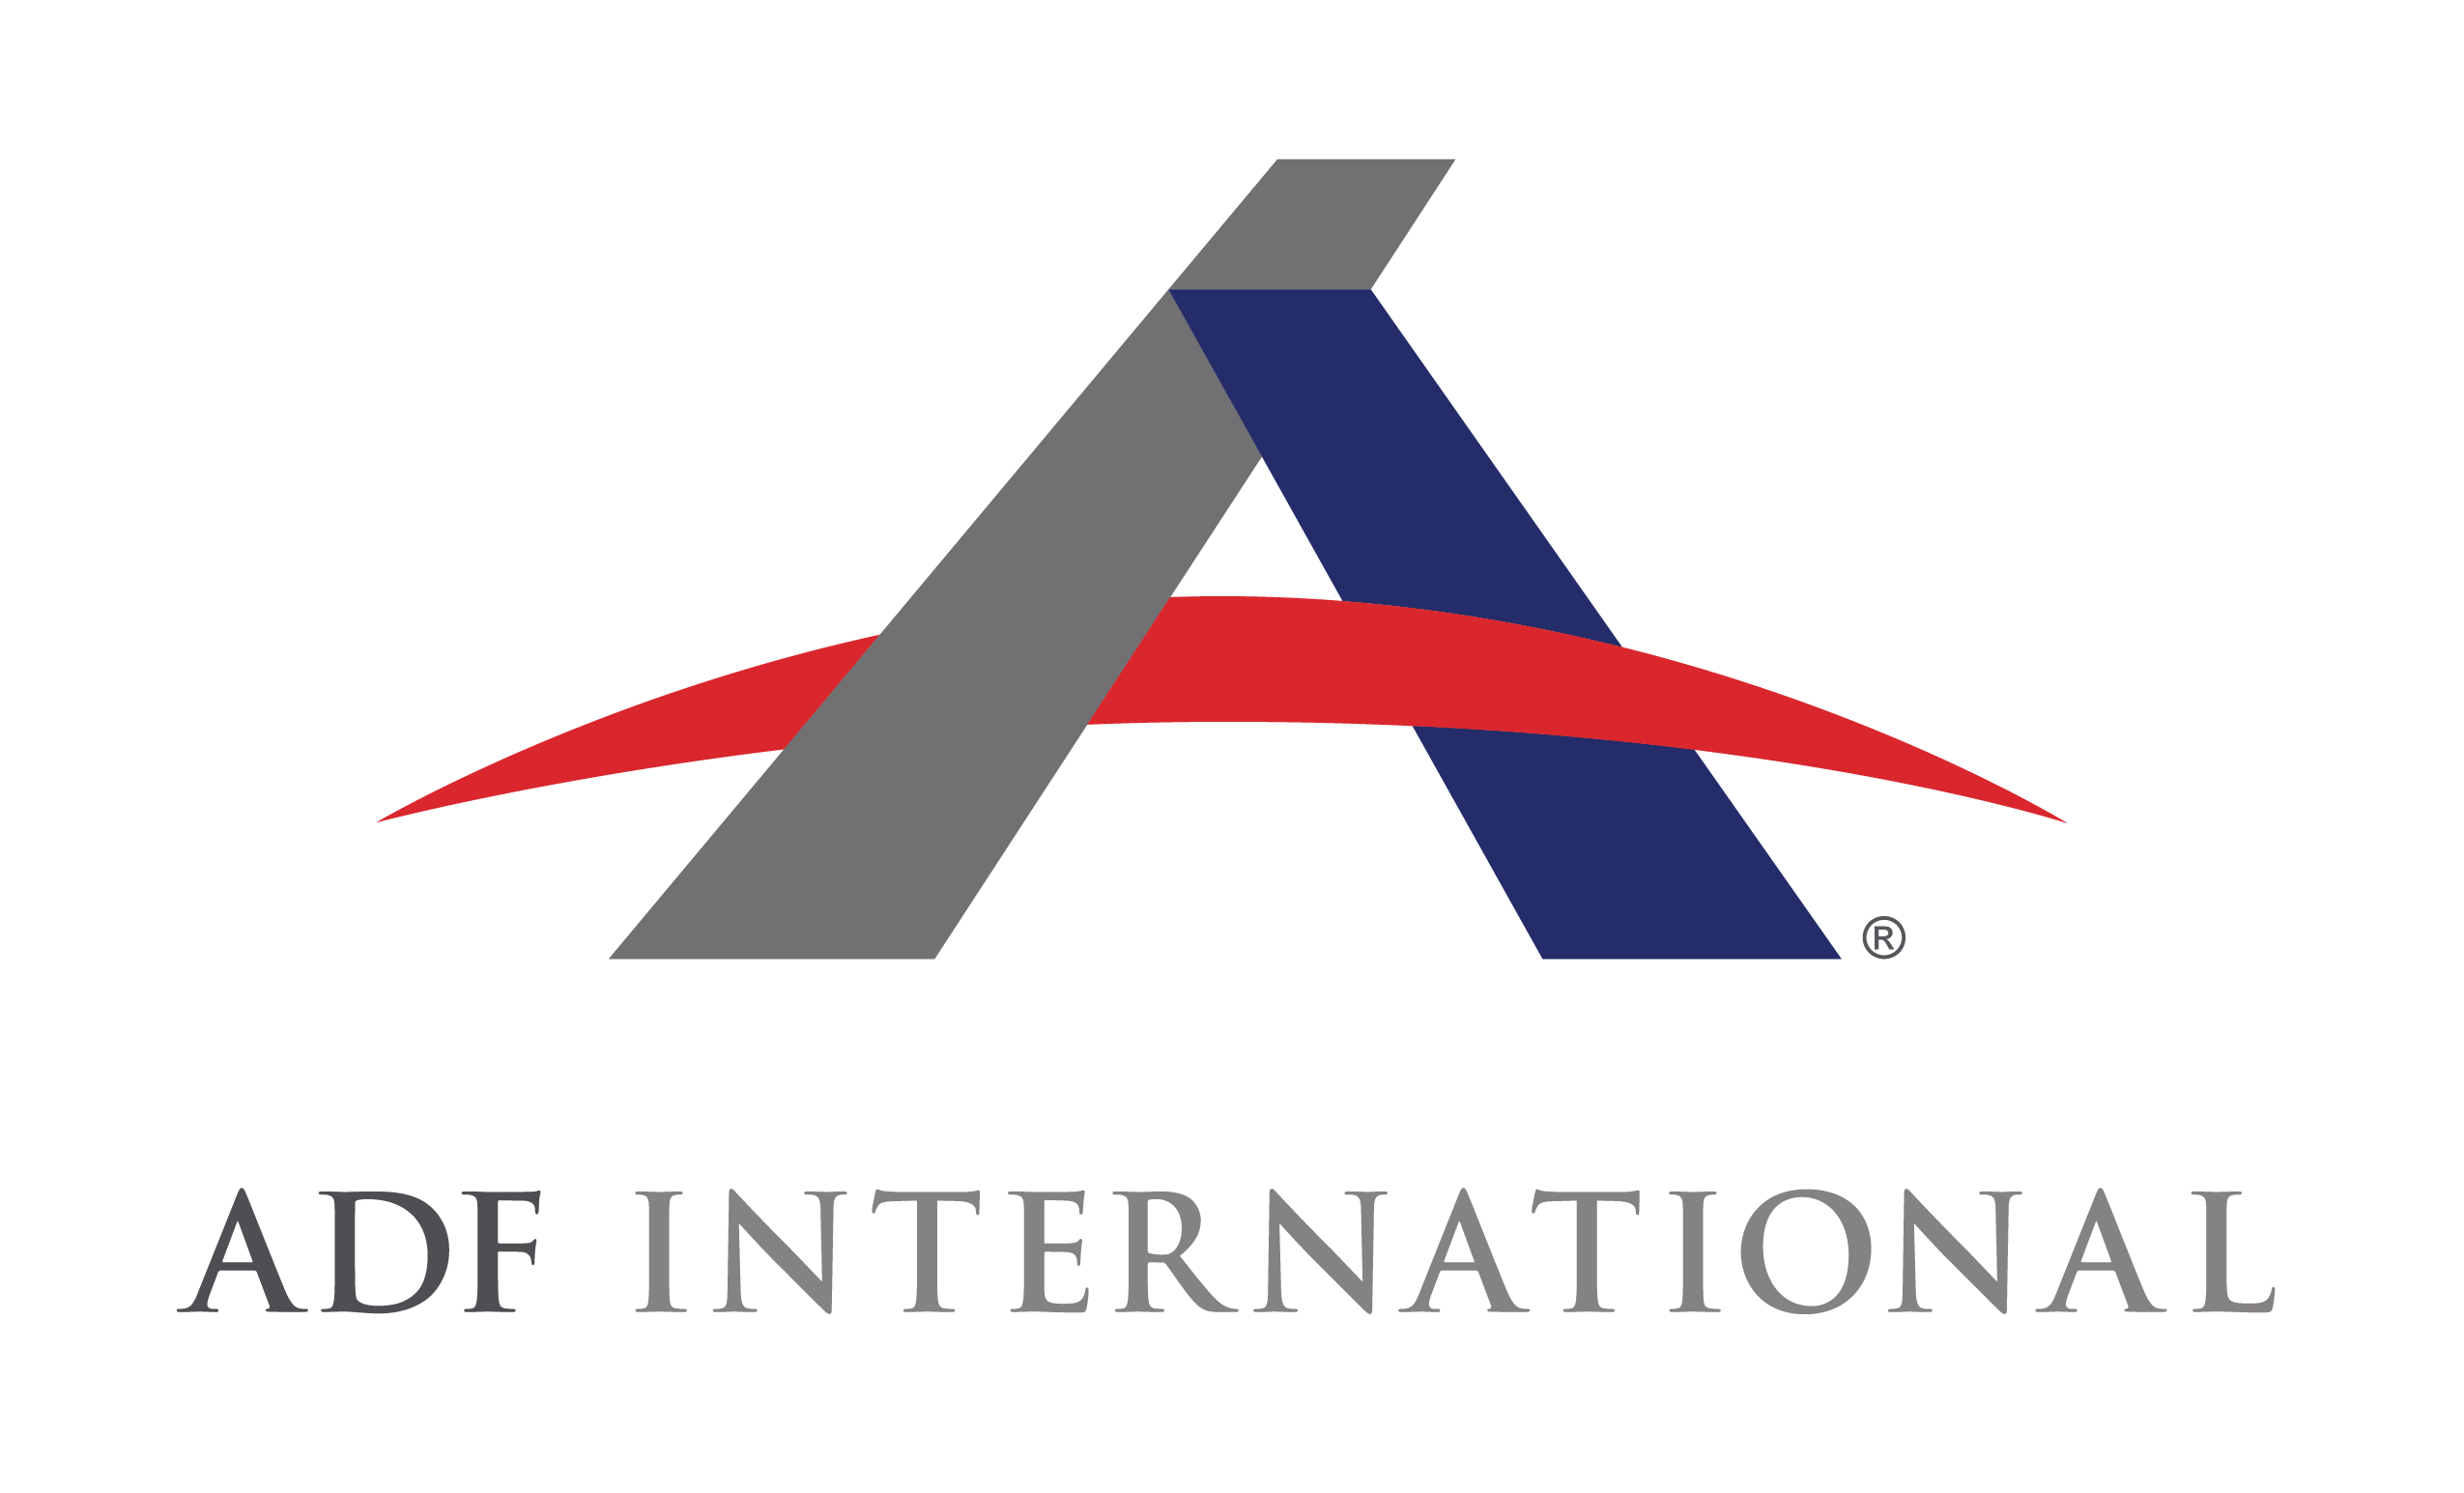 Visit ADF International's stand